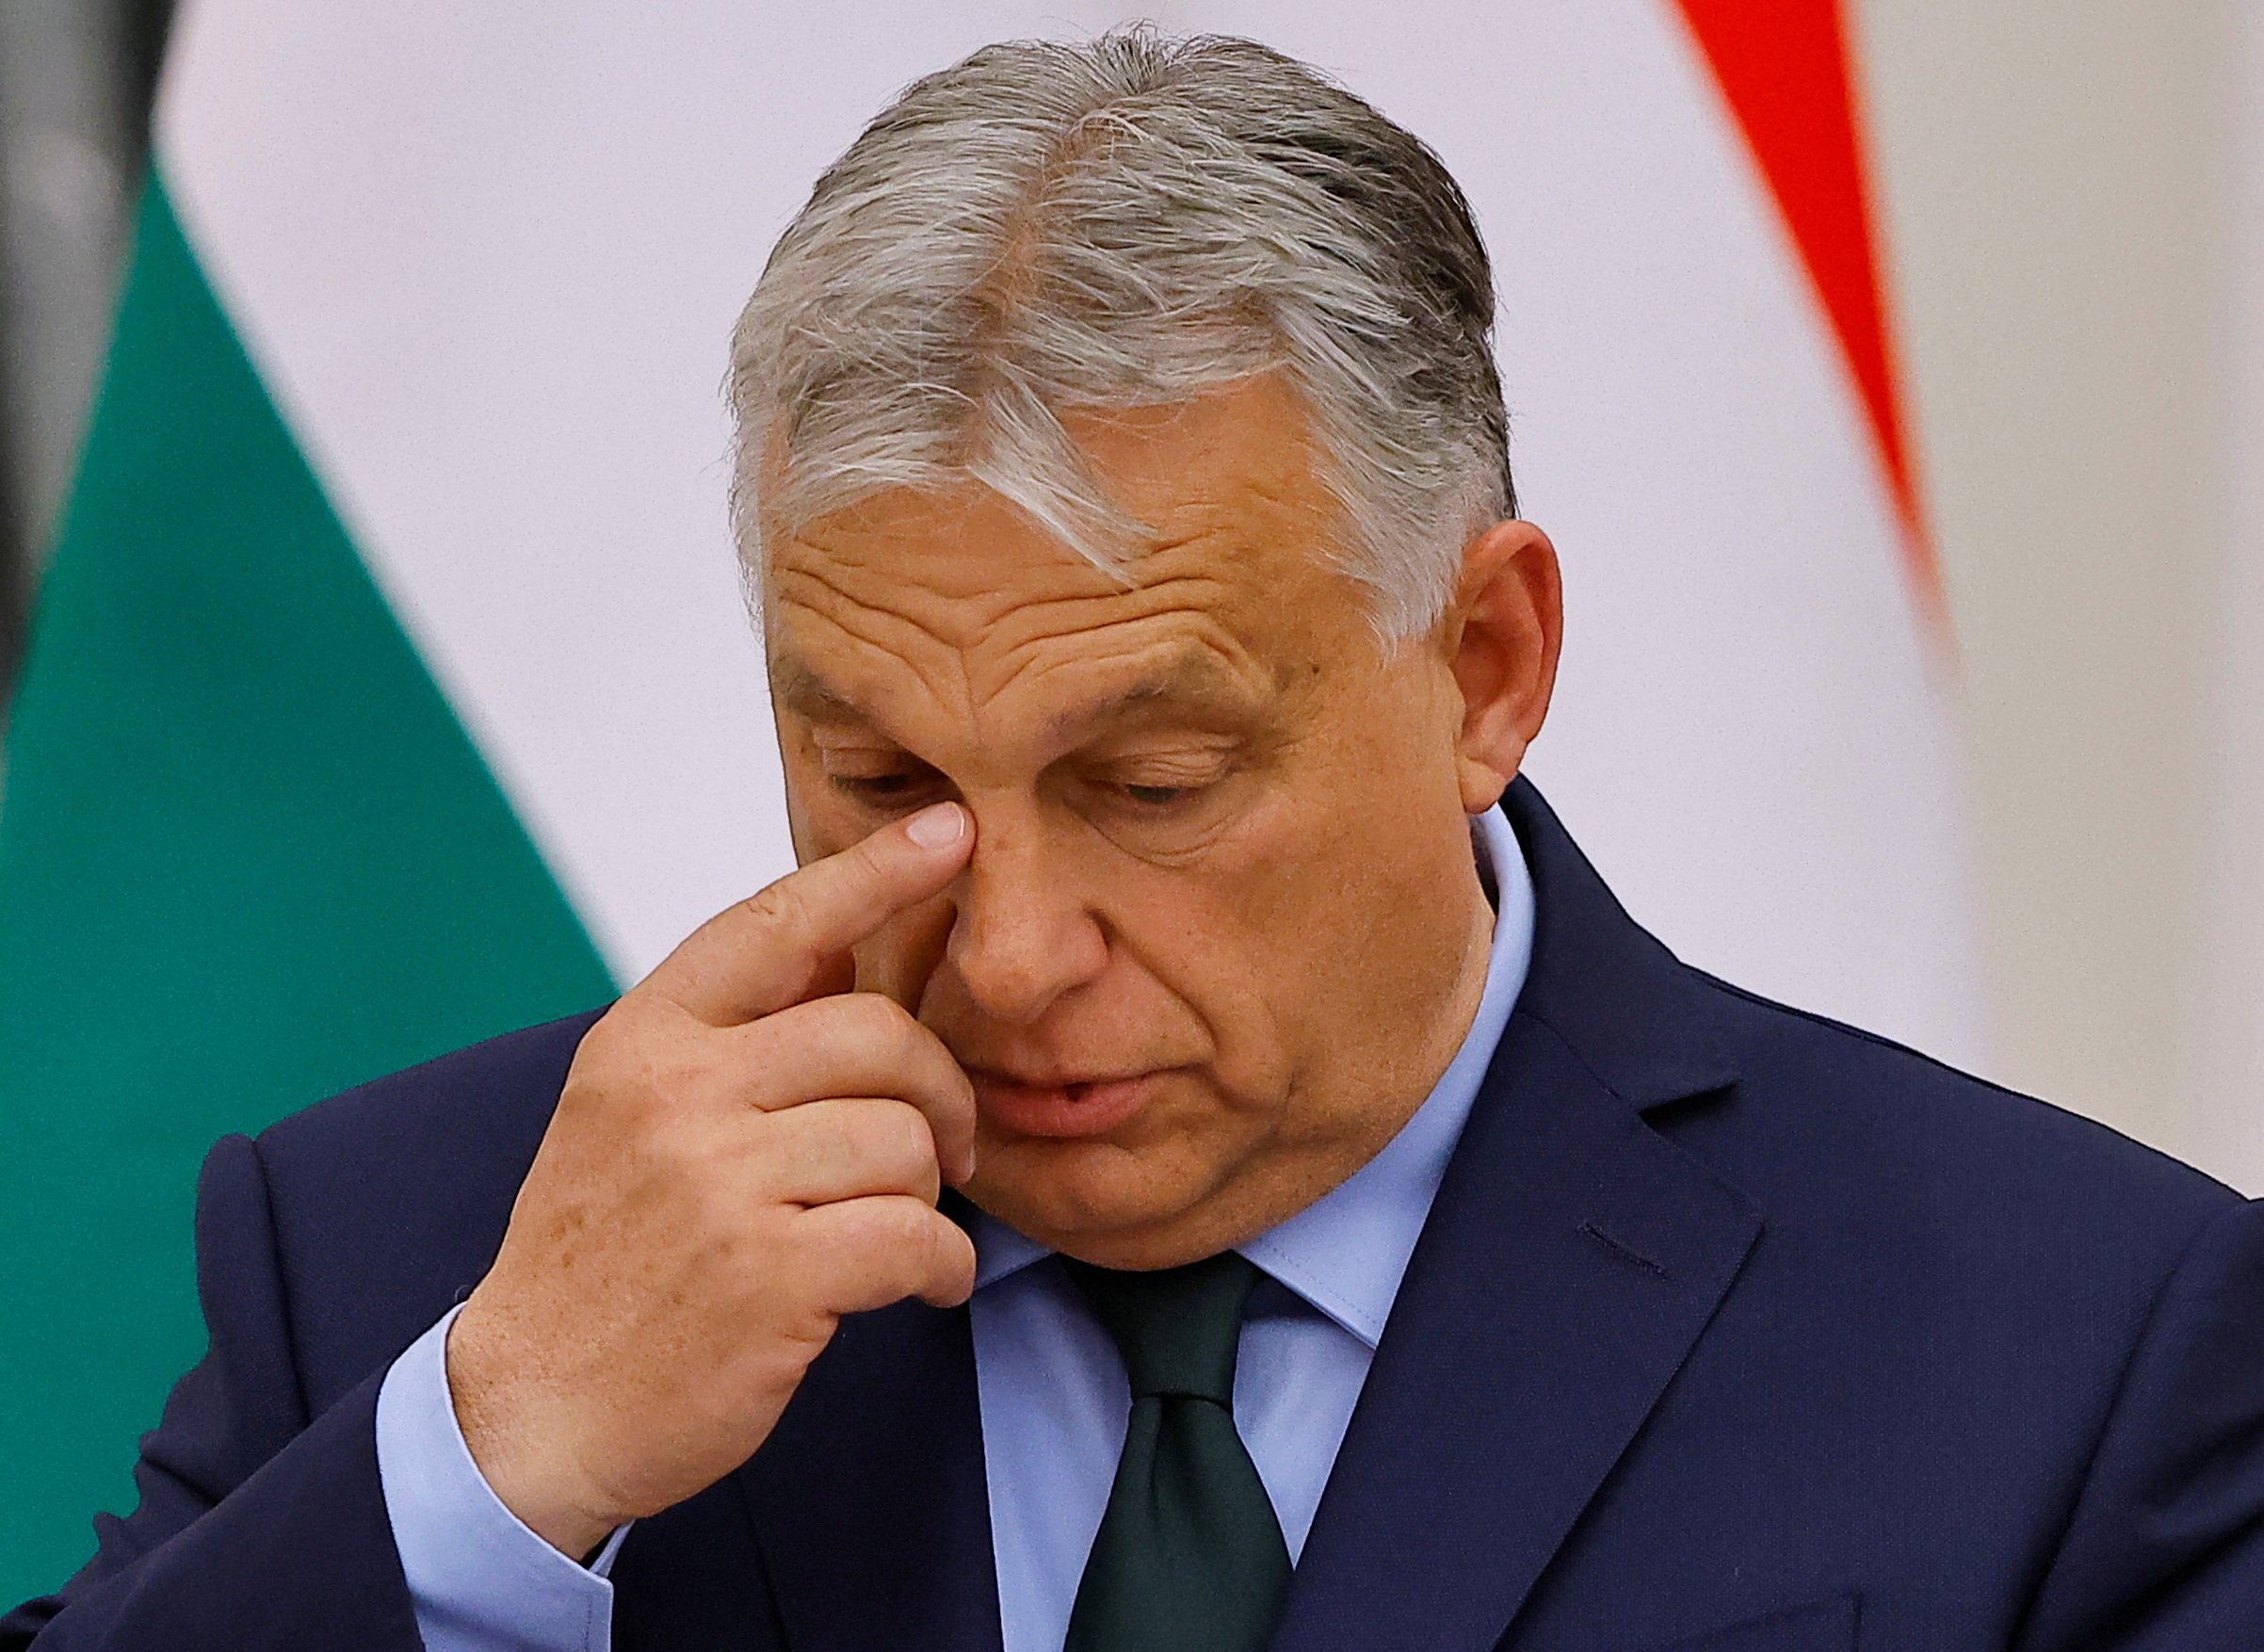 H Κομισιόν μποϊκοτάρει την προεδρία της Ουγγαρίας στην ΕΕ μετά το ταξίδι Όρμπαν στη Μόσχα